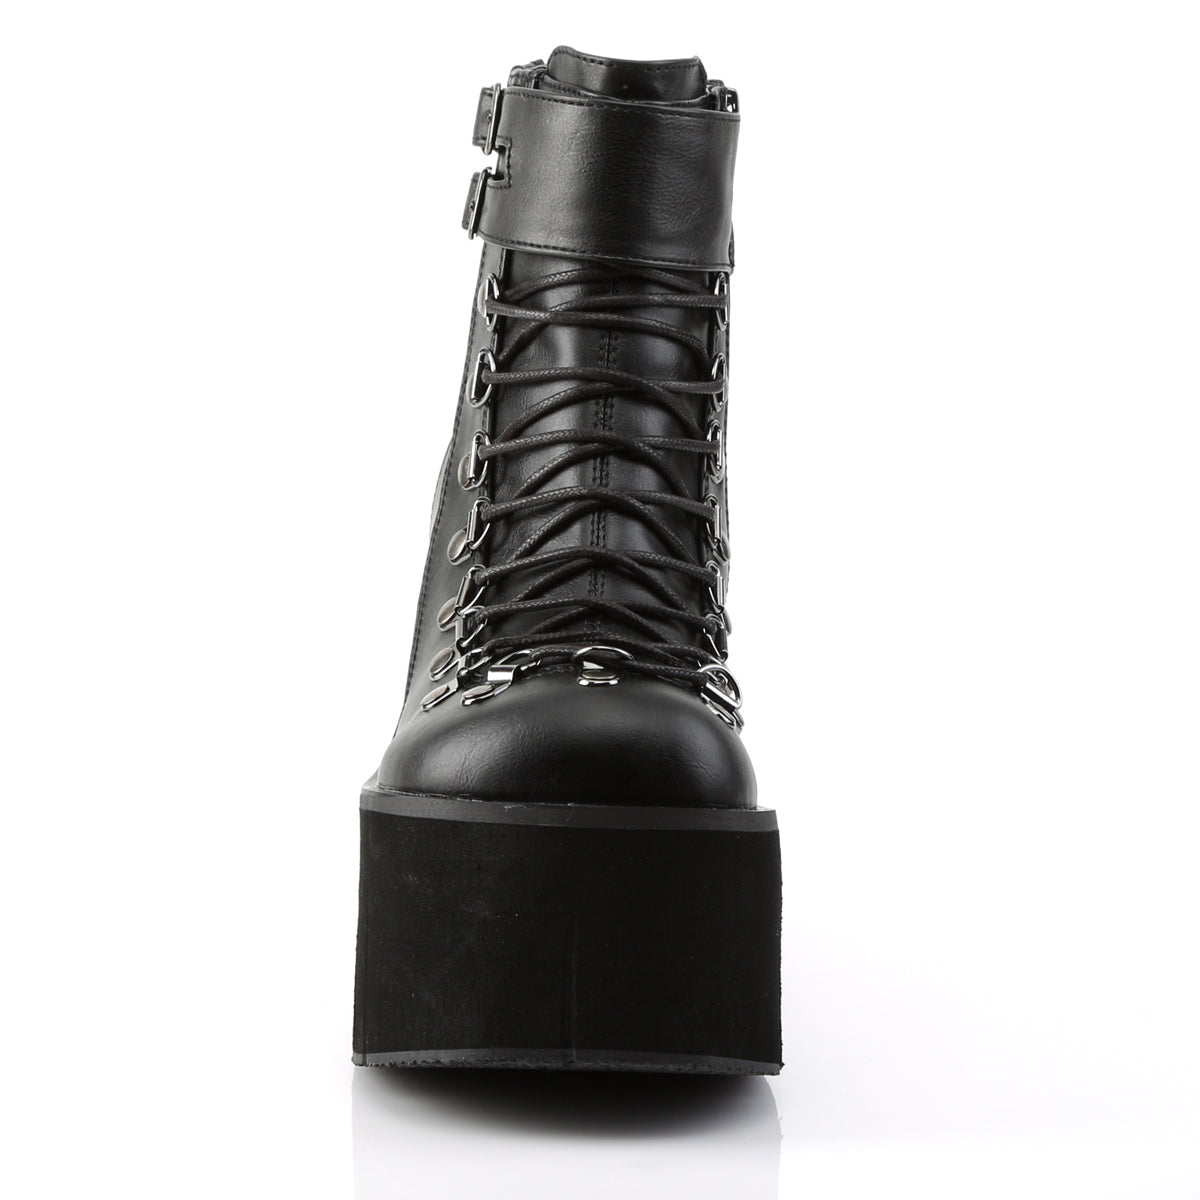 KERA-21 - Blk Vegan Leather - A Shoe Addiction Australia